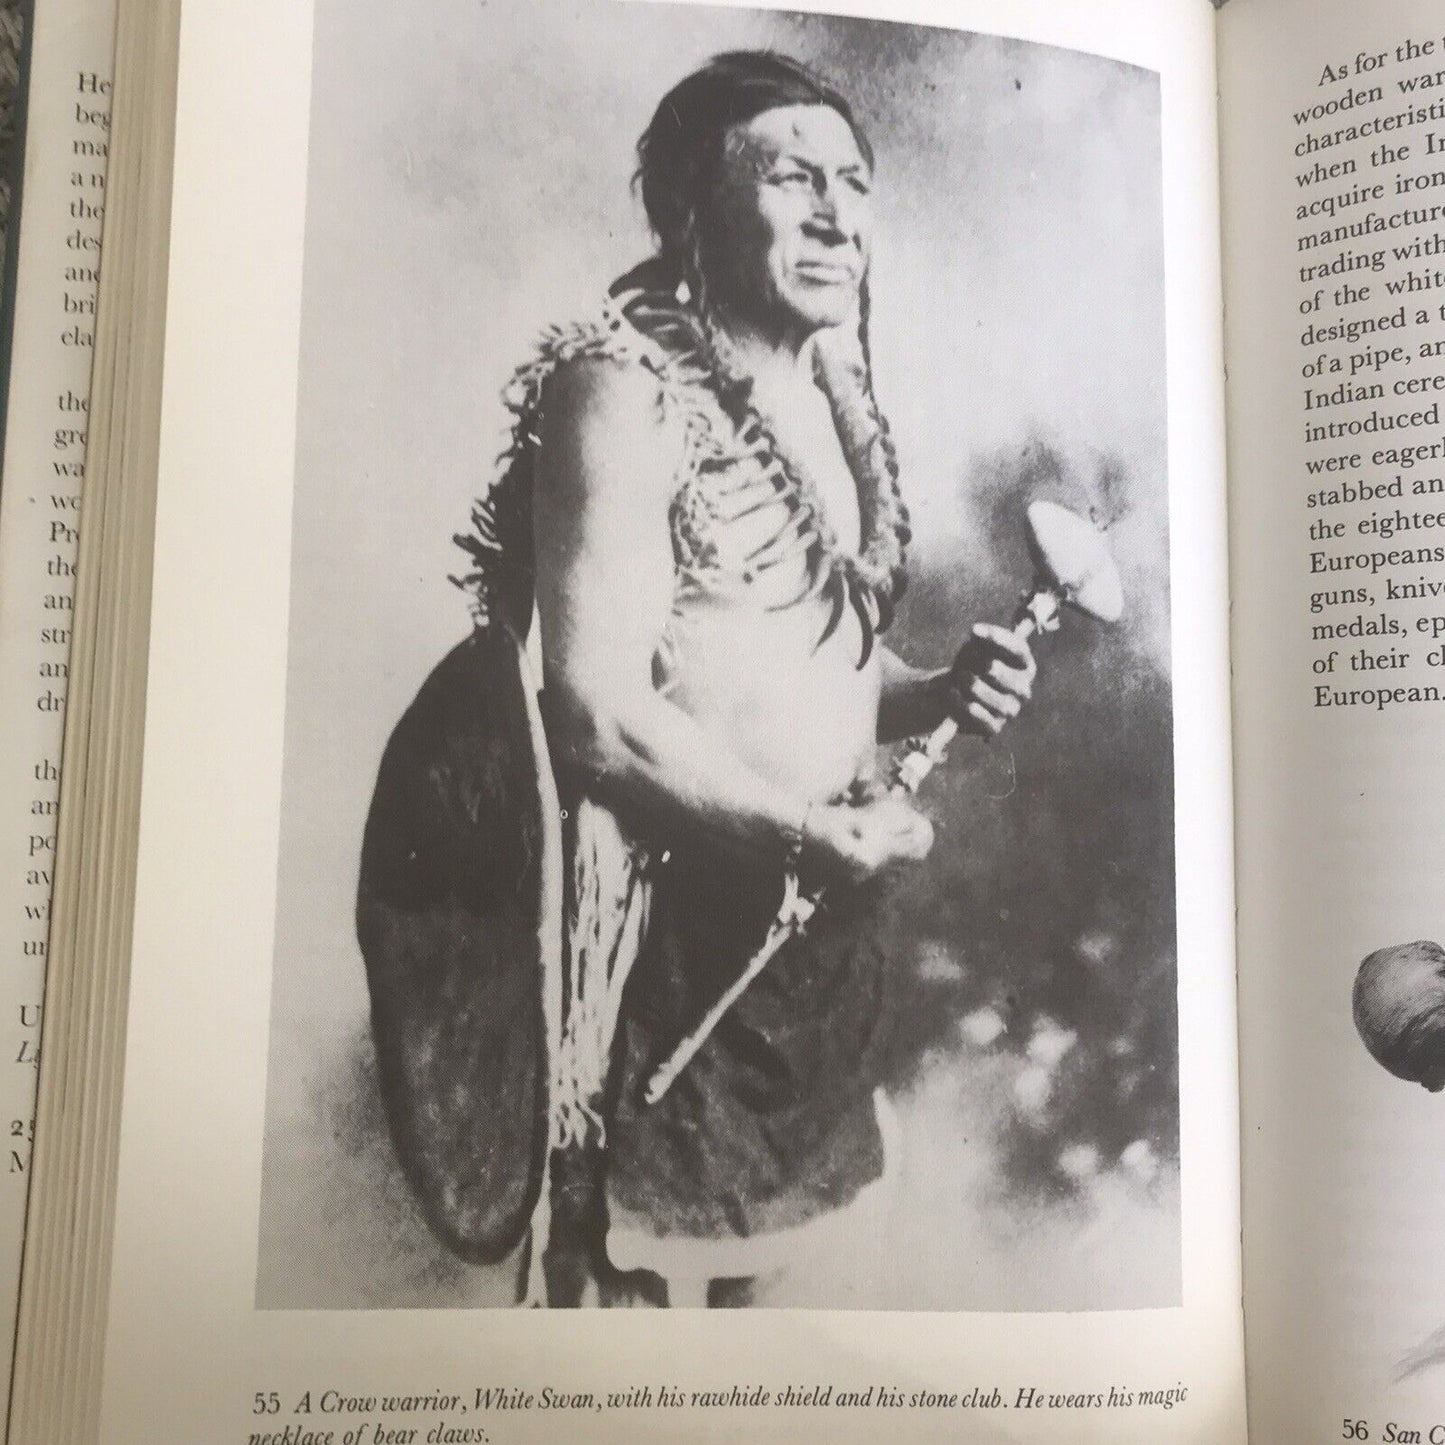 1979 North American Indian - Jon Manchip White (B. T. Batsford)